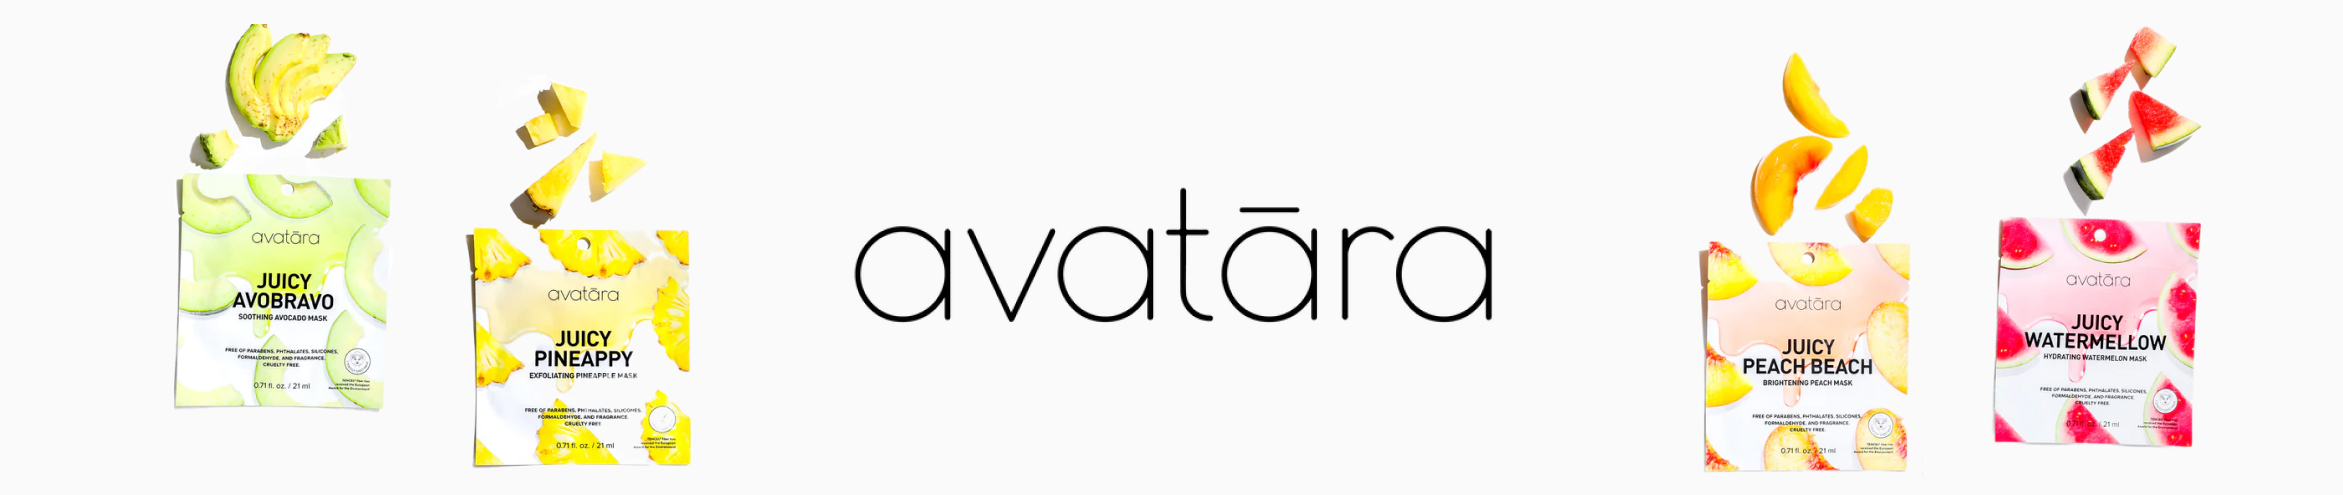 Avatara - Lip Balm & Treatments